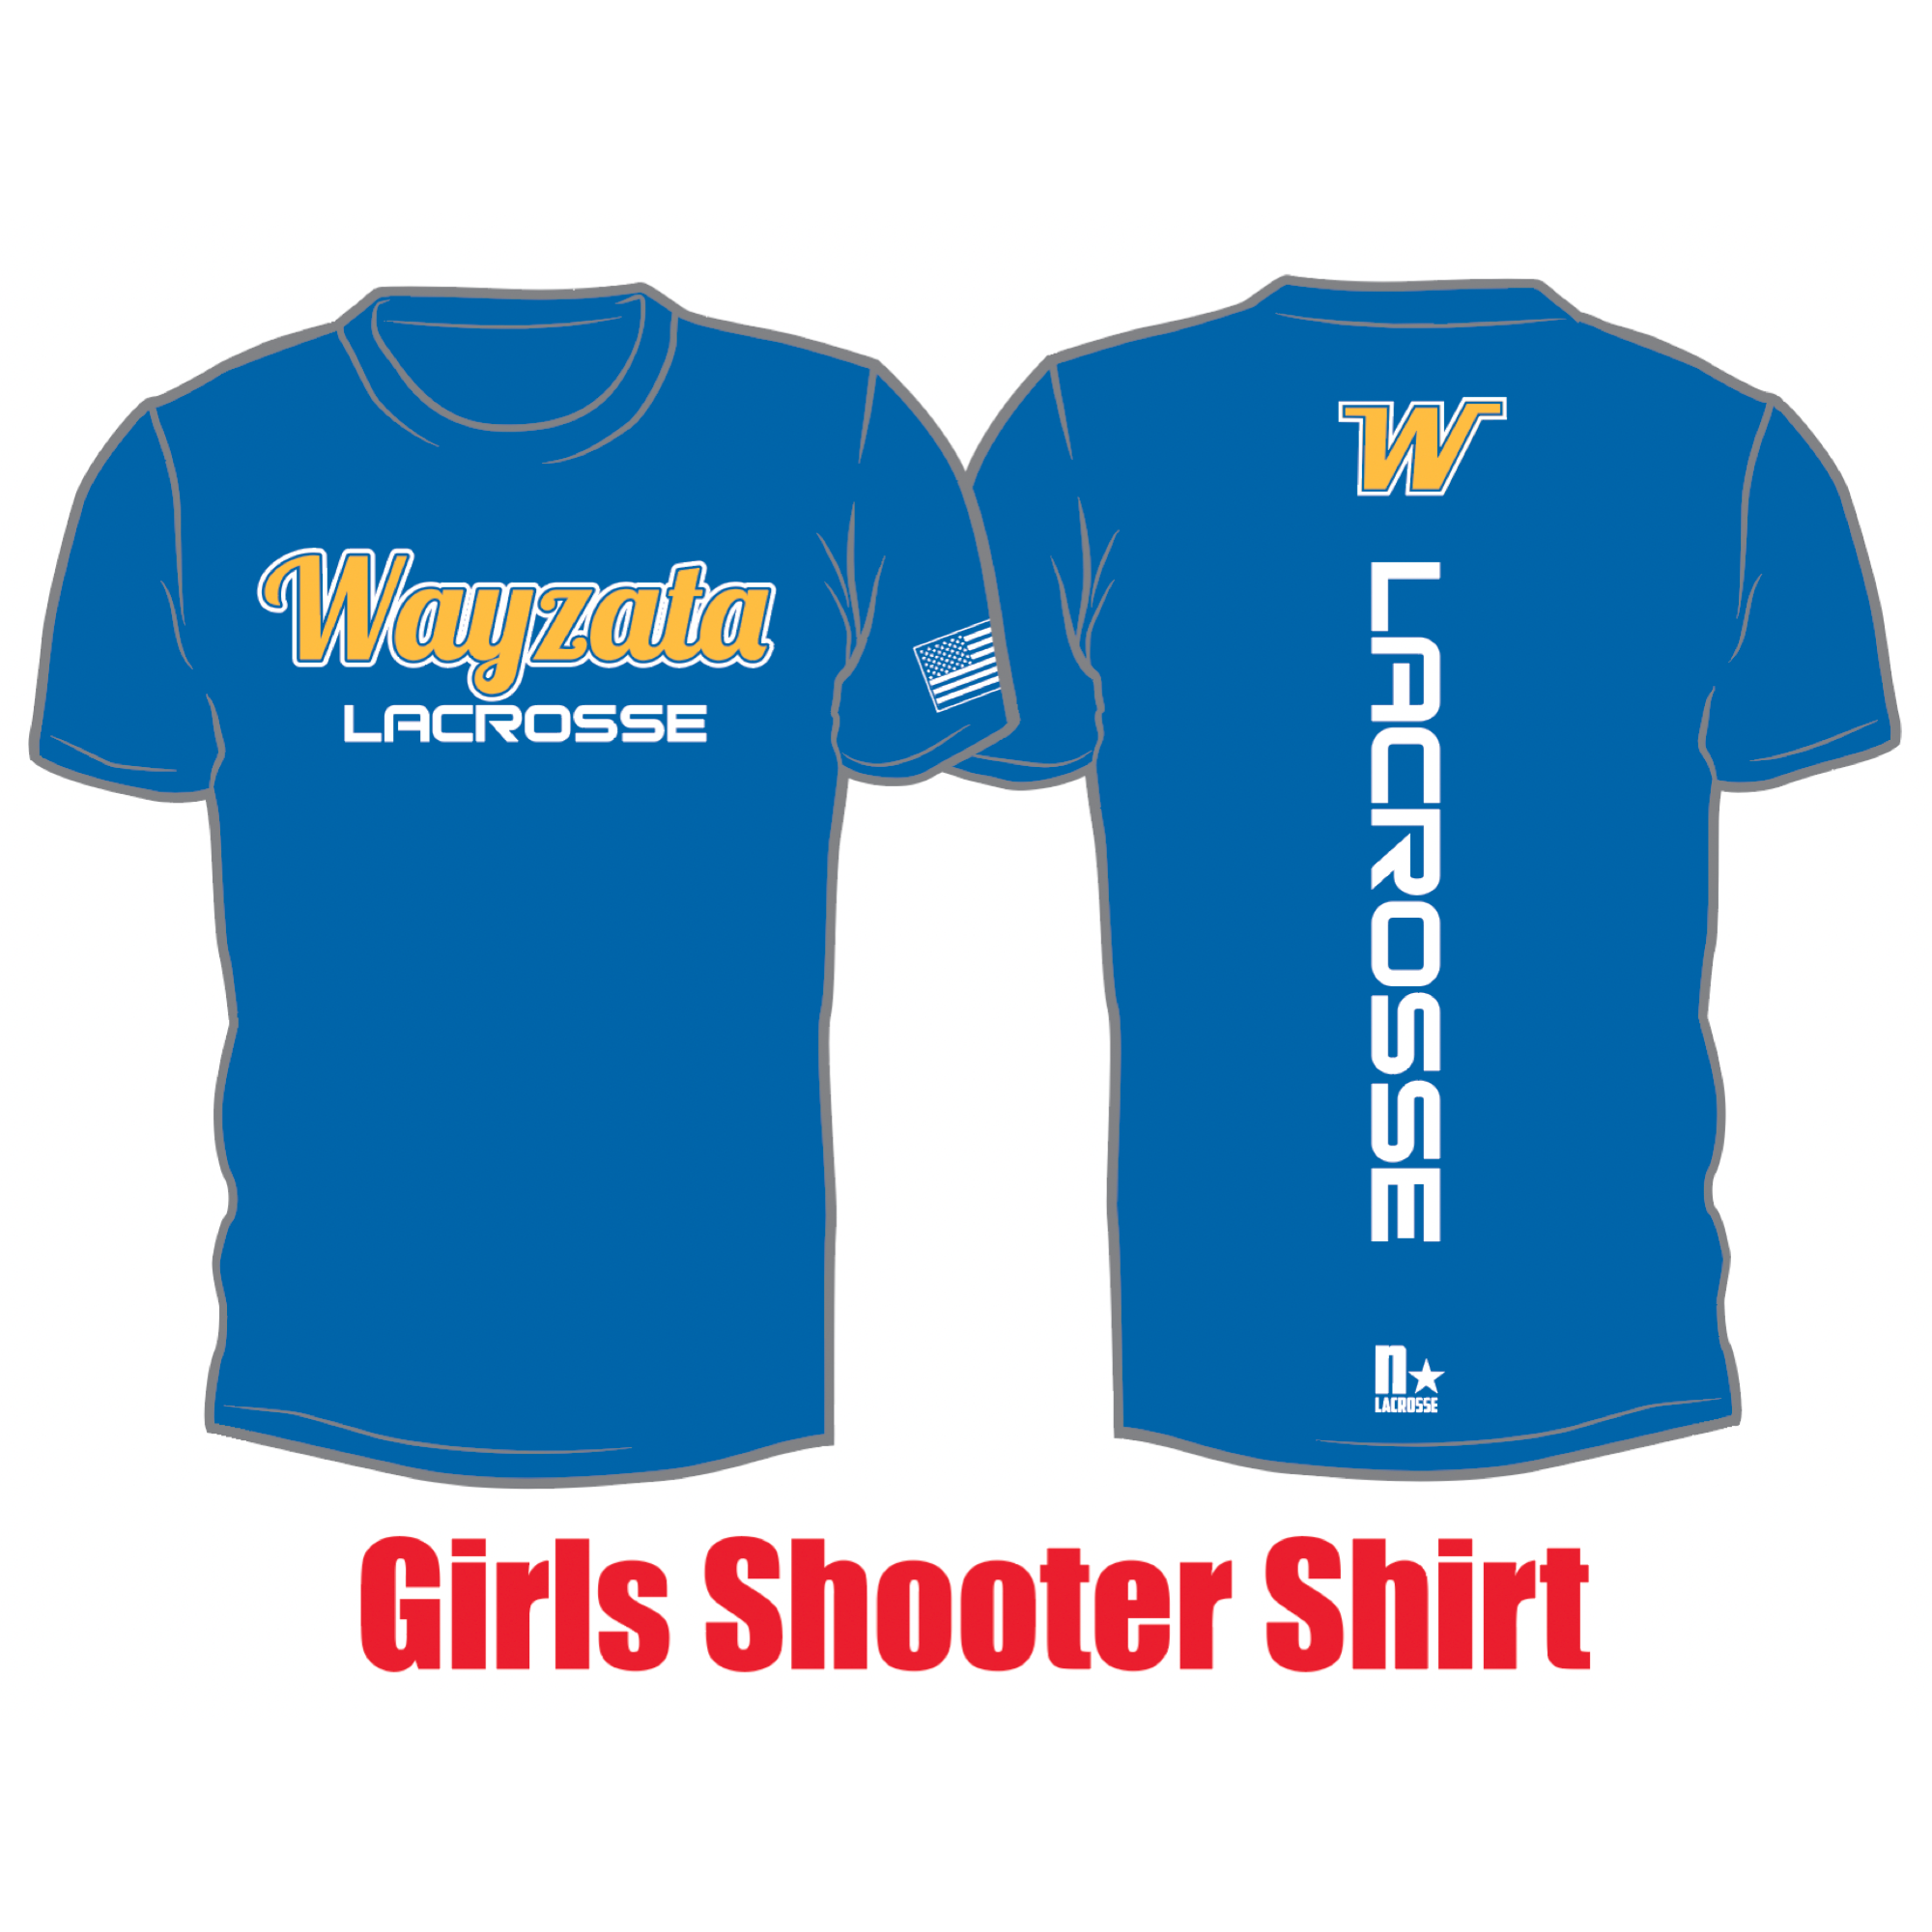 Wayzata Lacrosse Girls Shooter Shirt